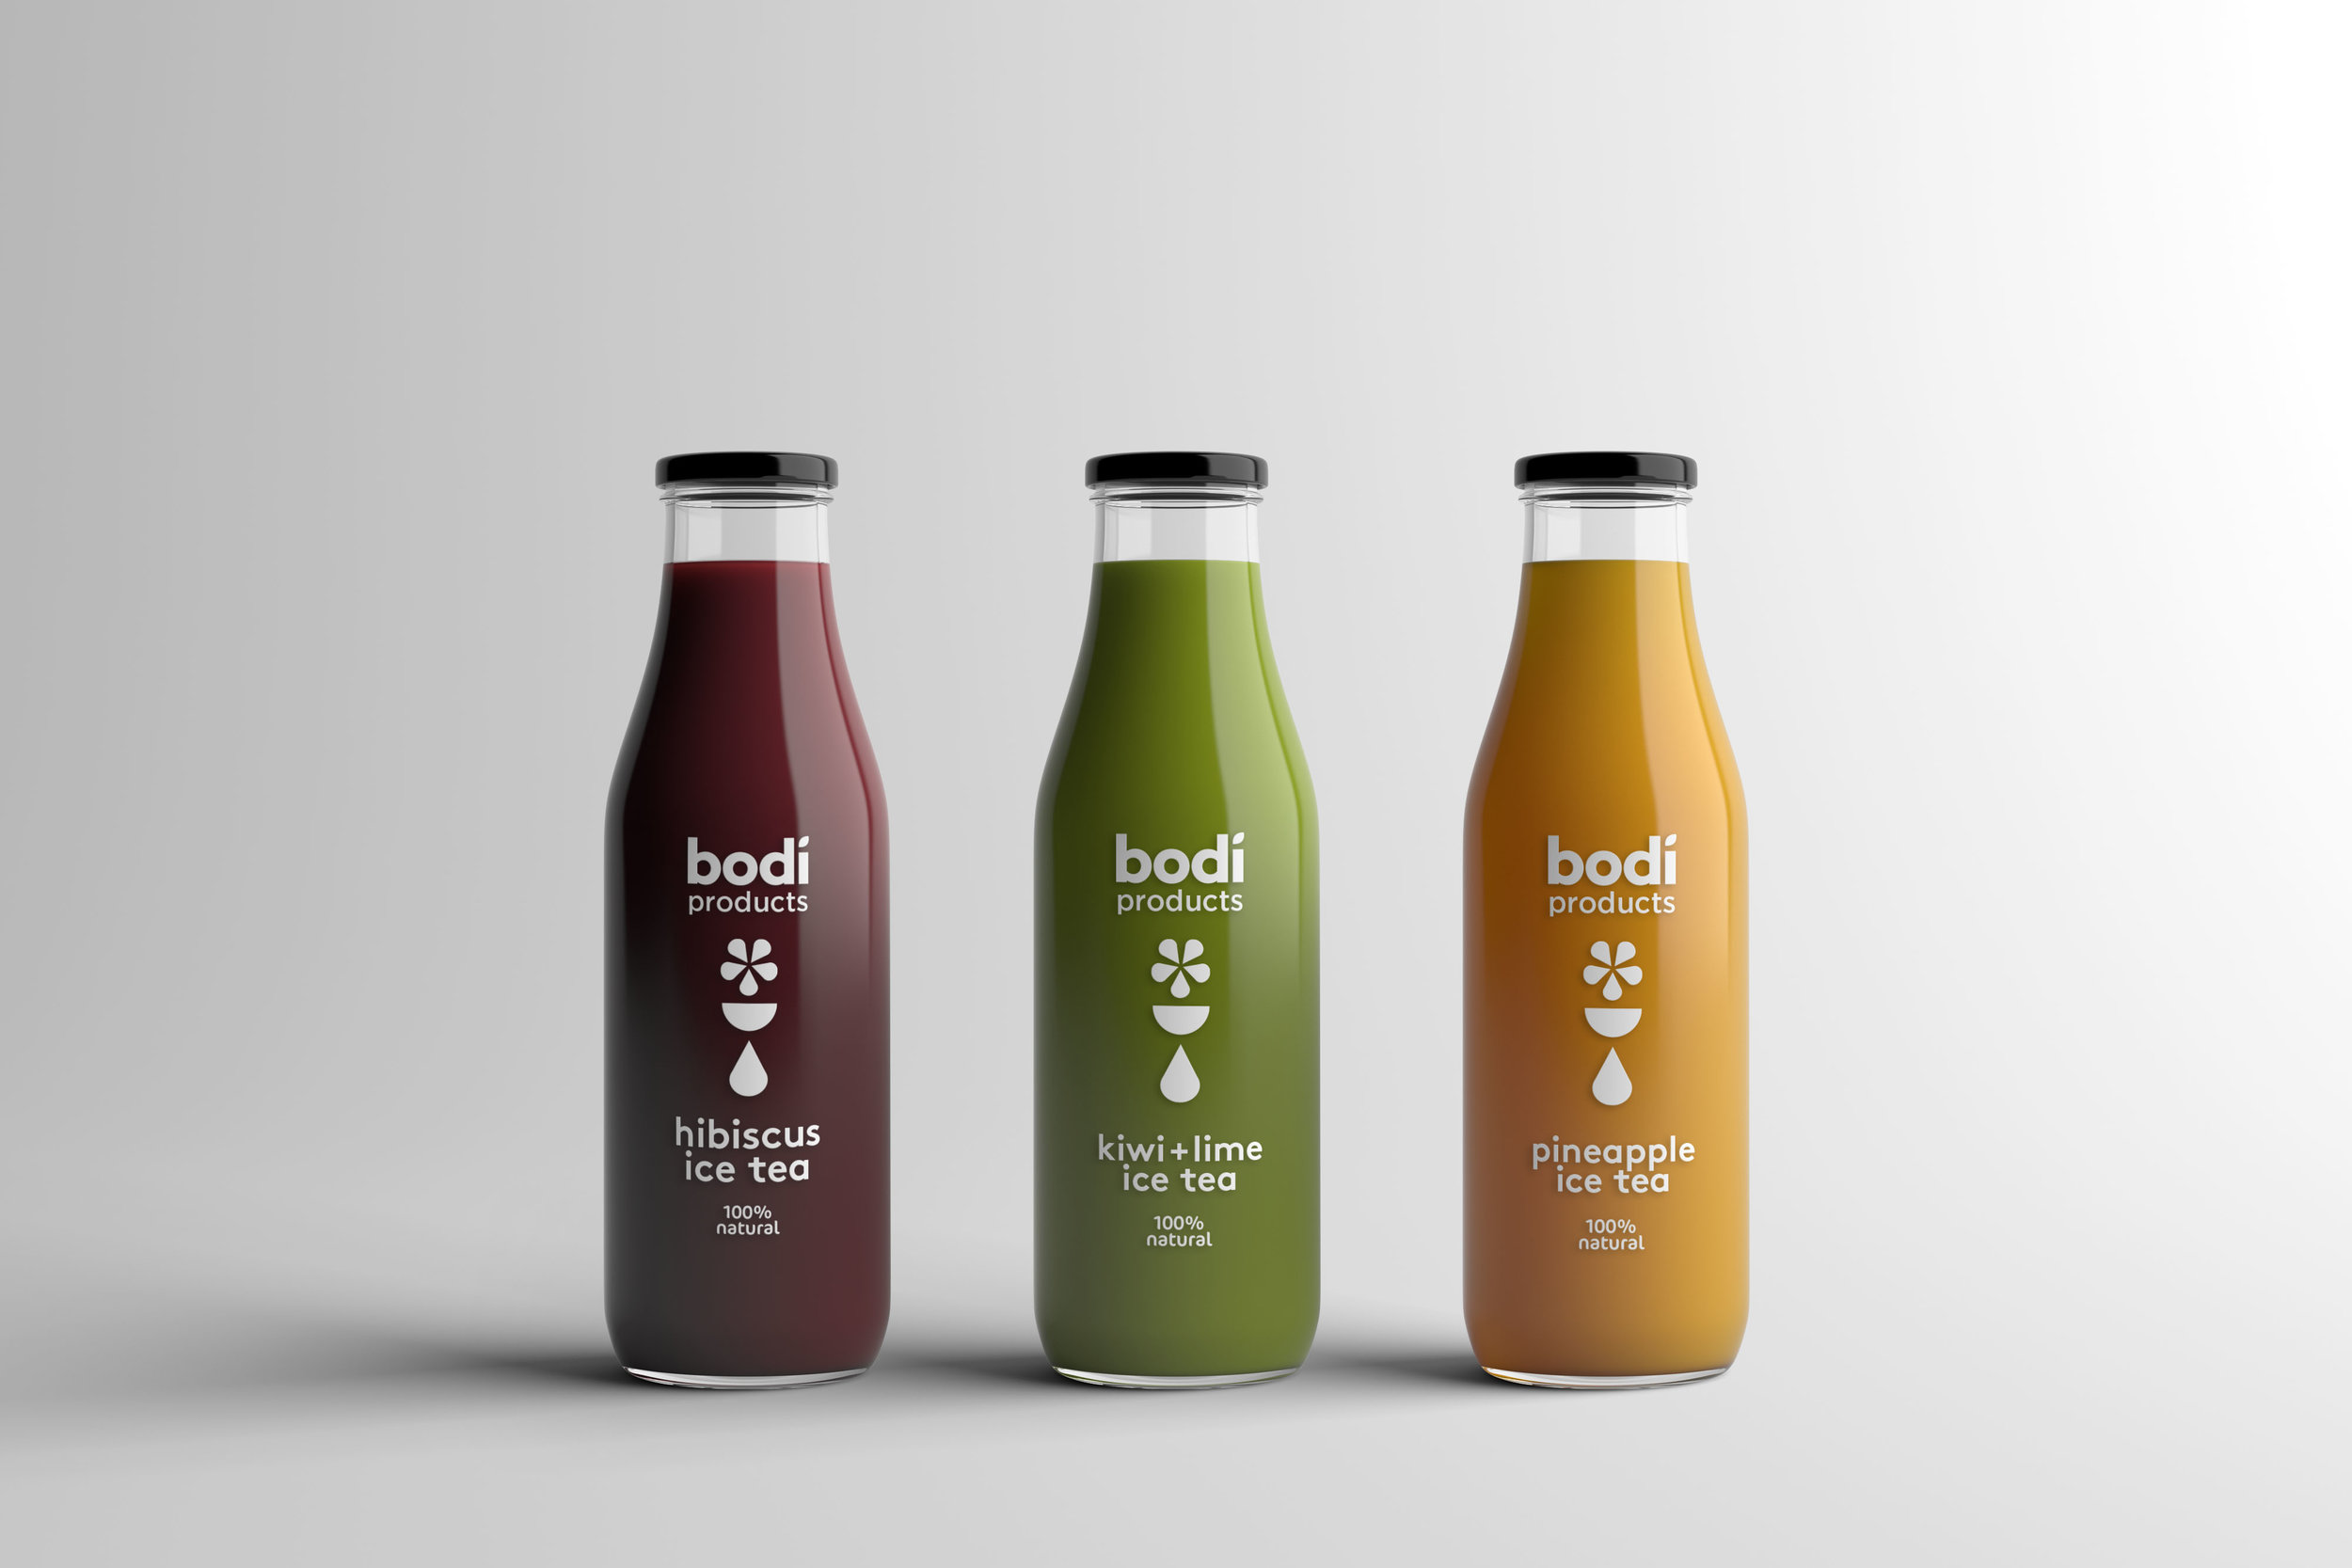 Freelance-graphic-designer-Three Bodi ice tea flavours in glass bottles